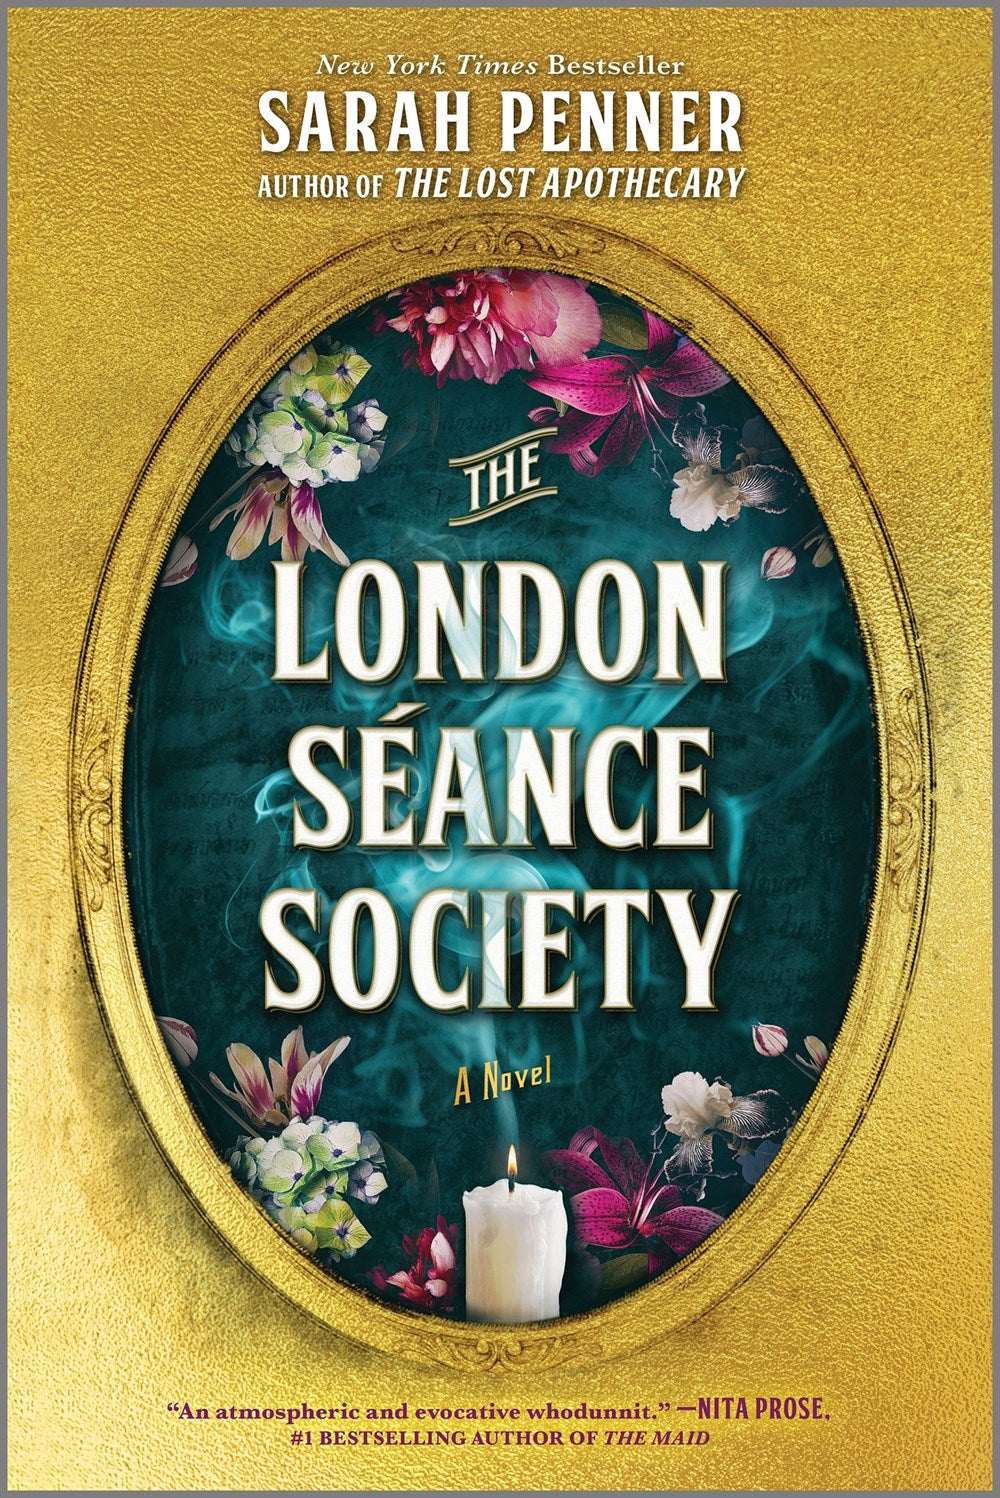 The London Seance Society